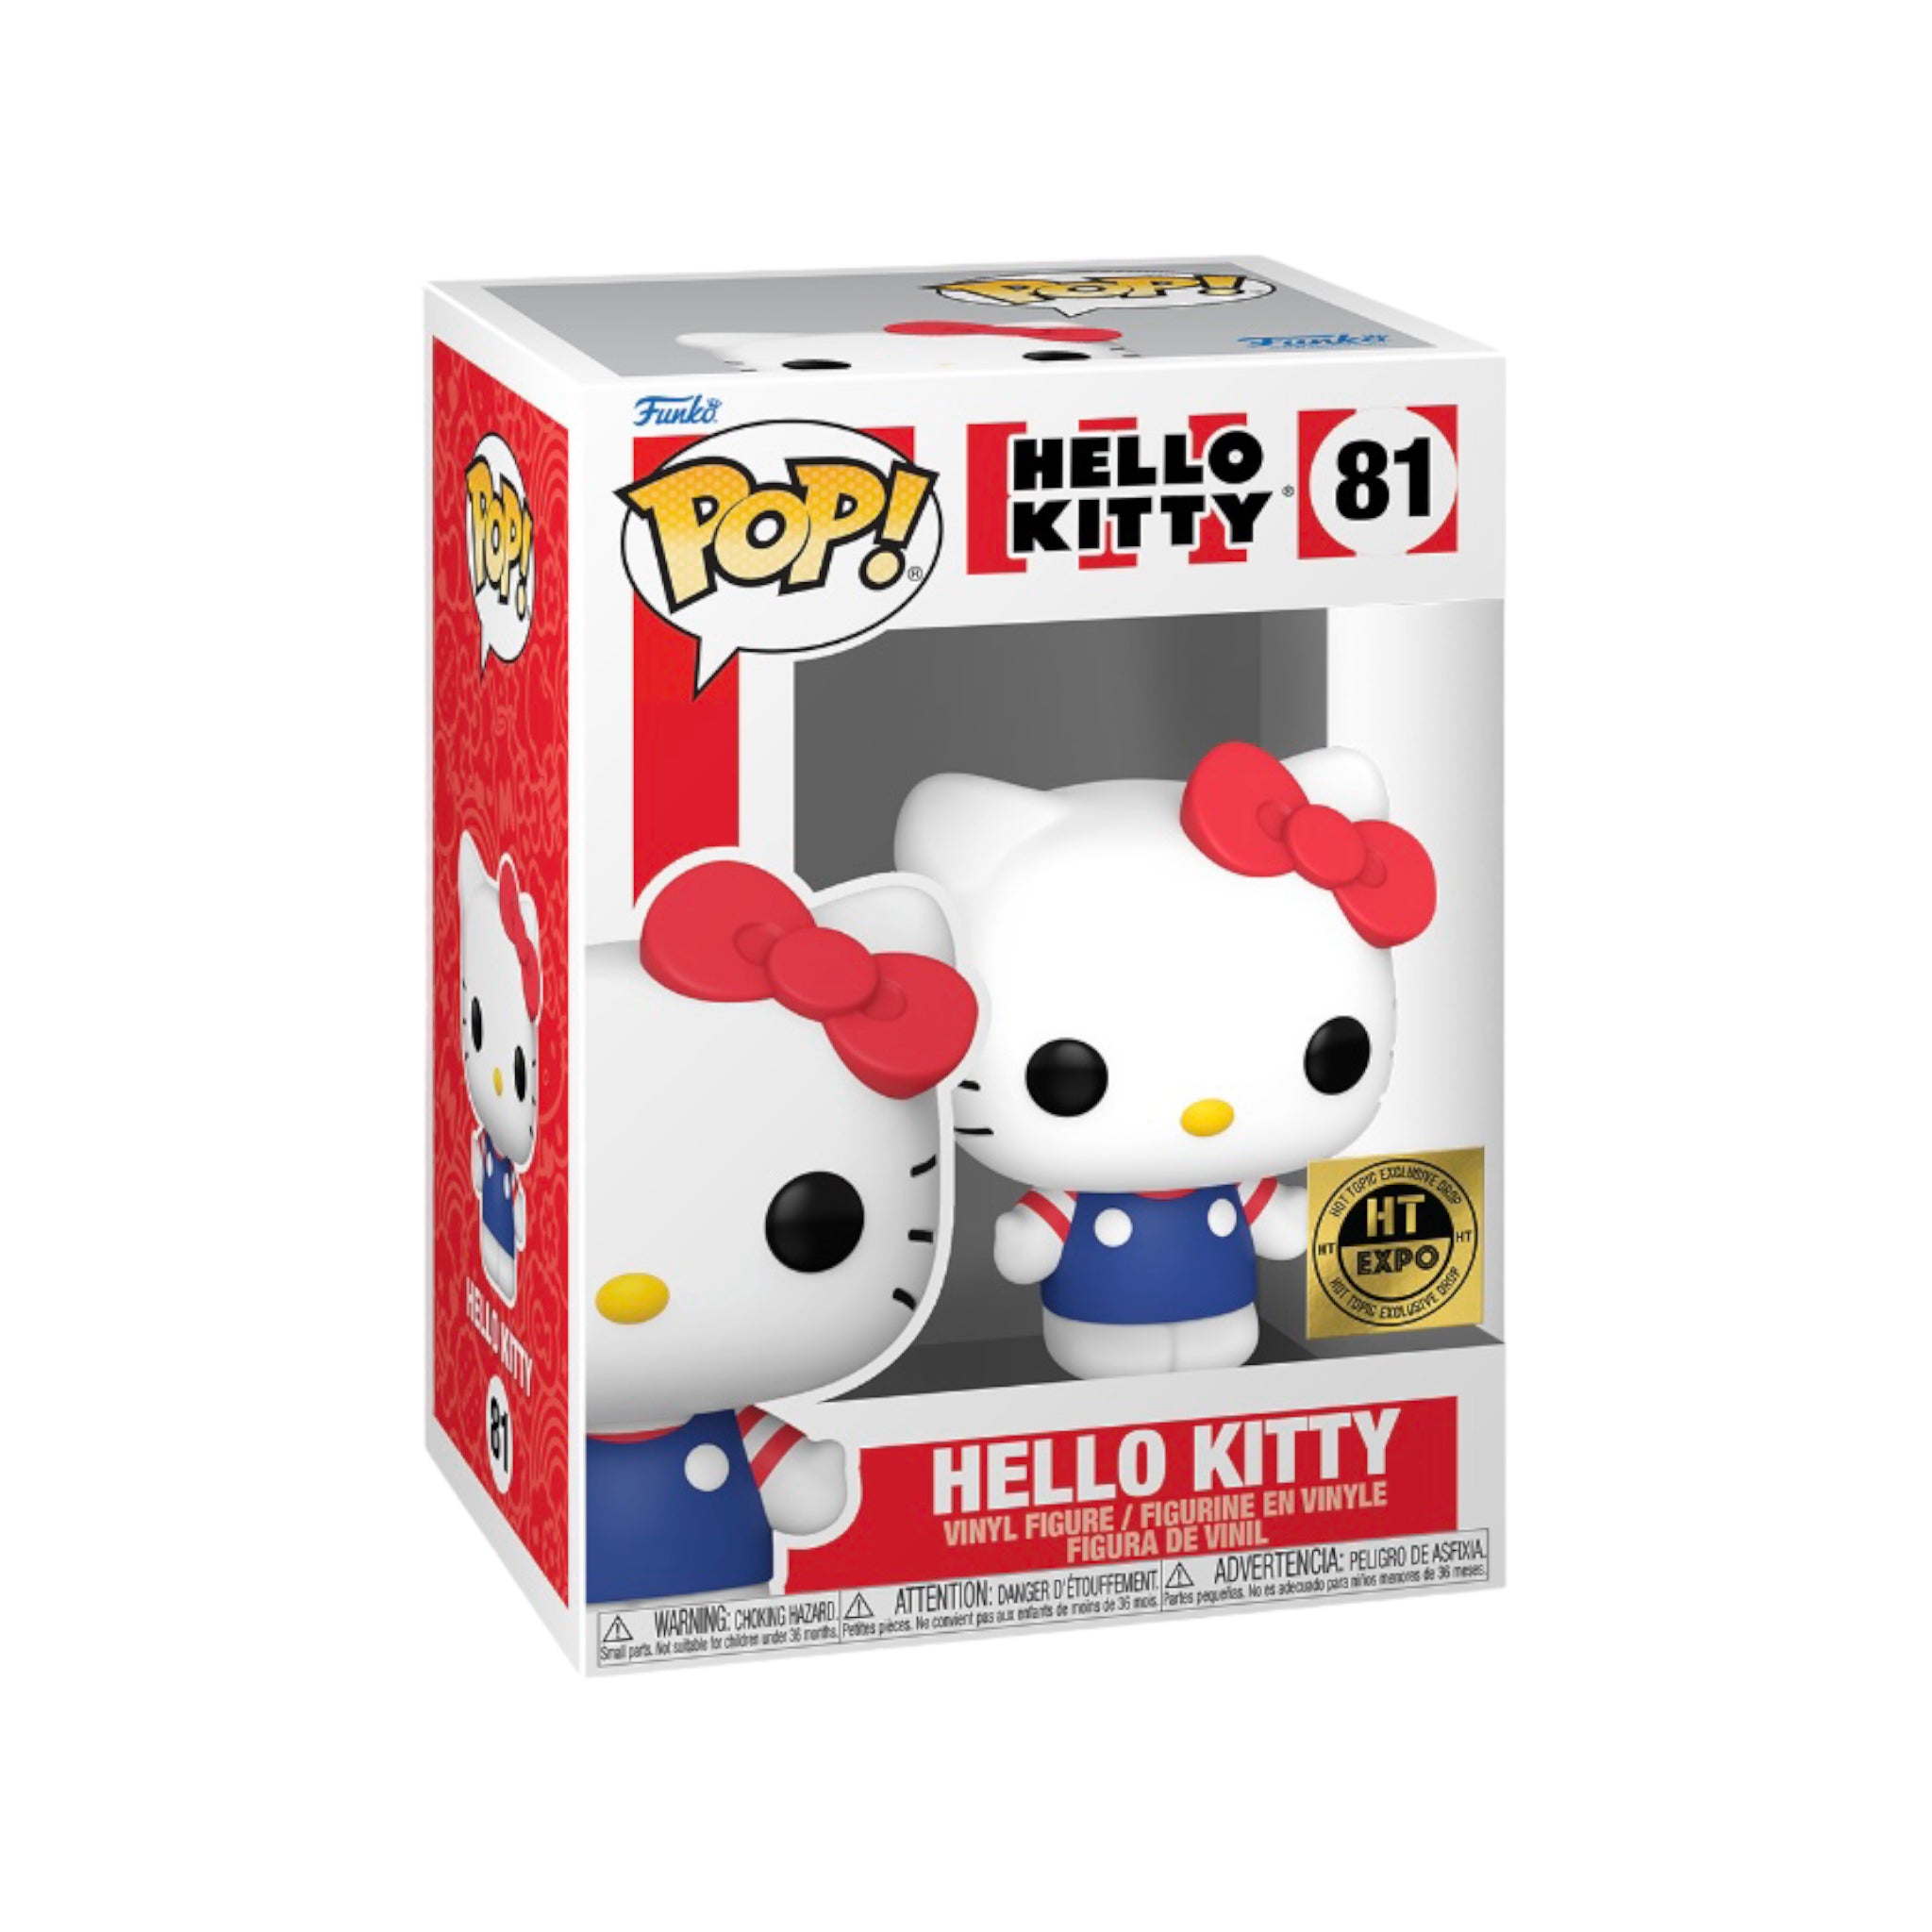 Hello Kitty #81 Funko Pop! - Hello Kitty - Hot Topic Expo Exclusive